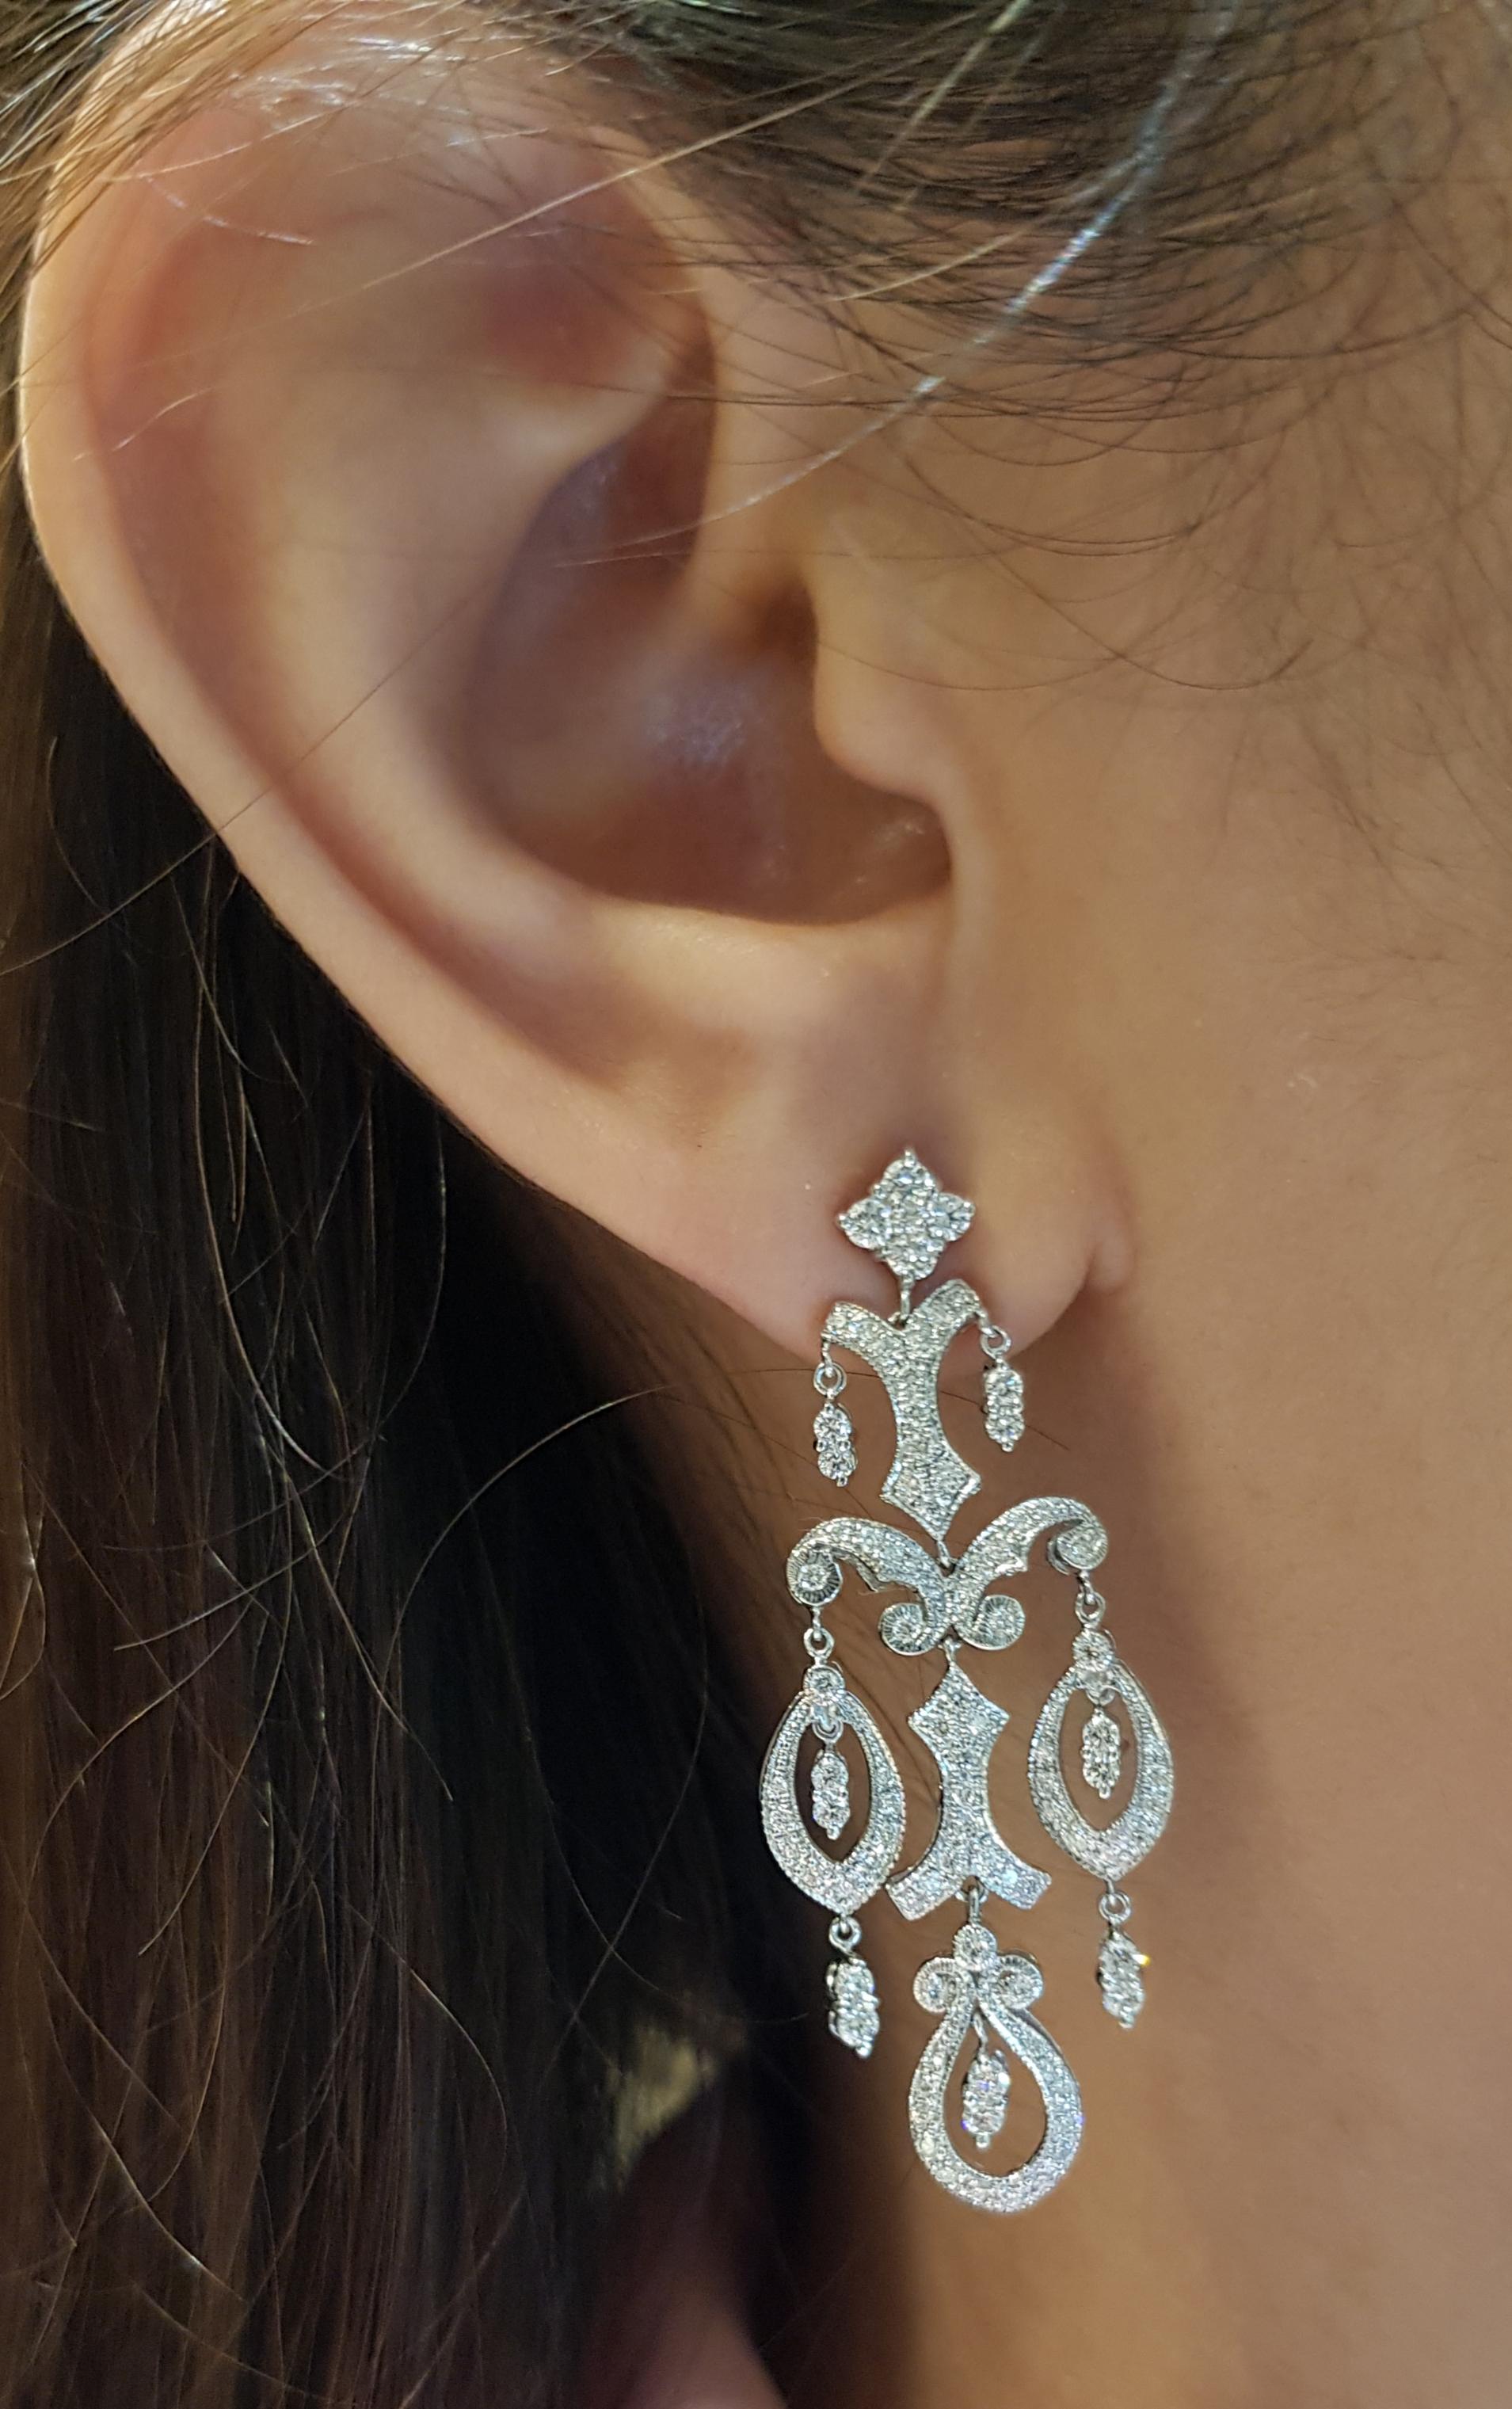 Diamond 1.51 carats Earrings set in 18 Karat White Gold Settings

Width:  2.0 cm 
Length:  4.6 cm
Total Weight: 11.5 grams

